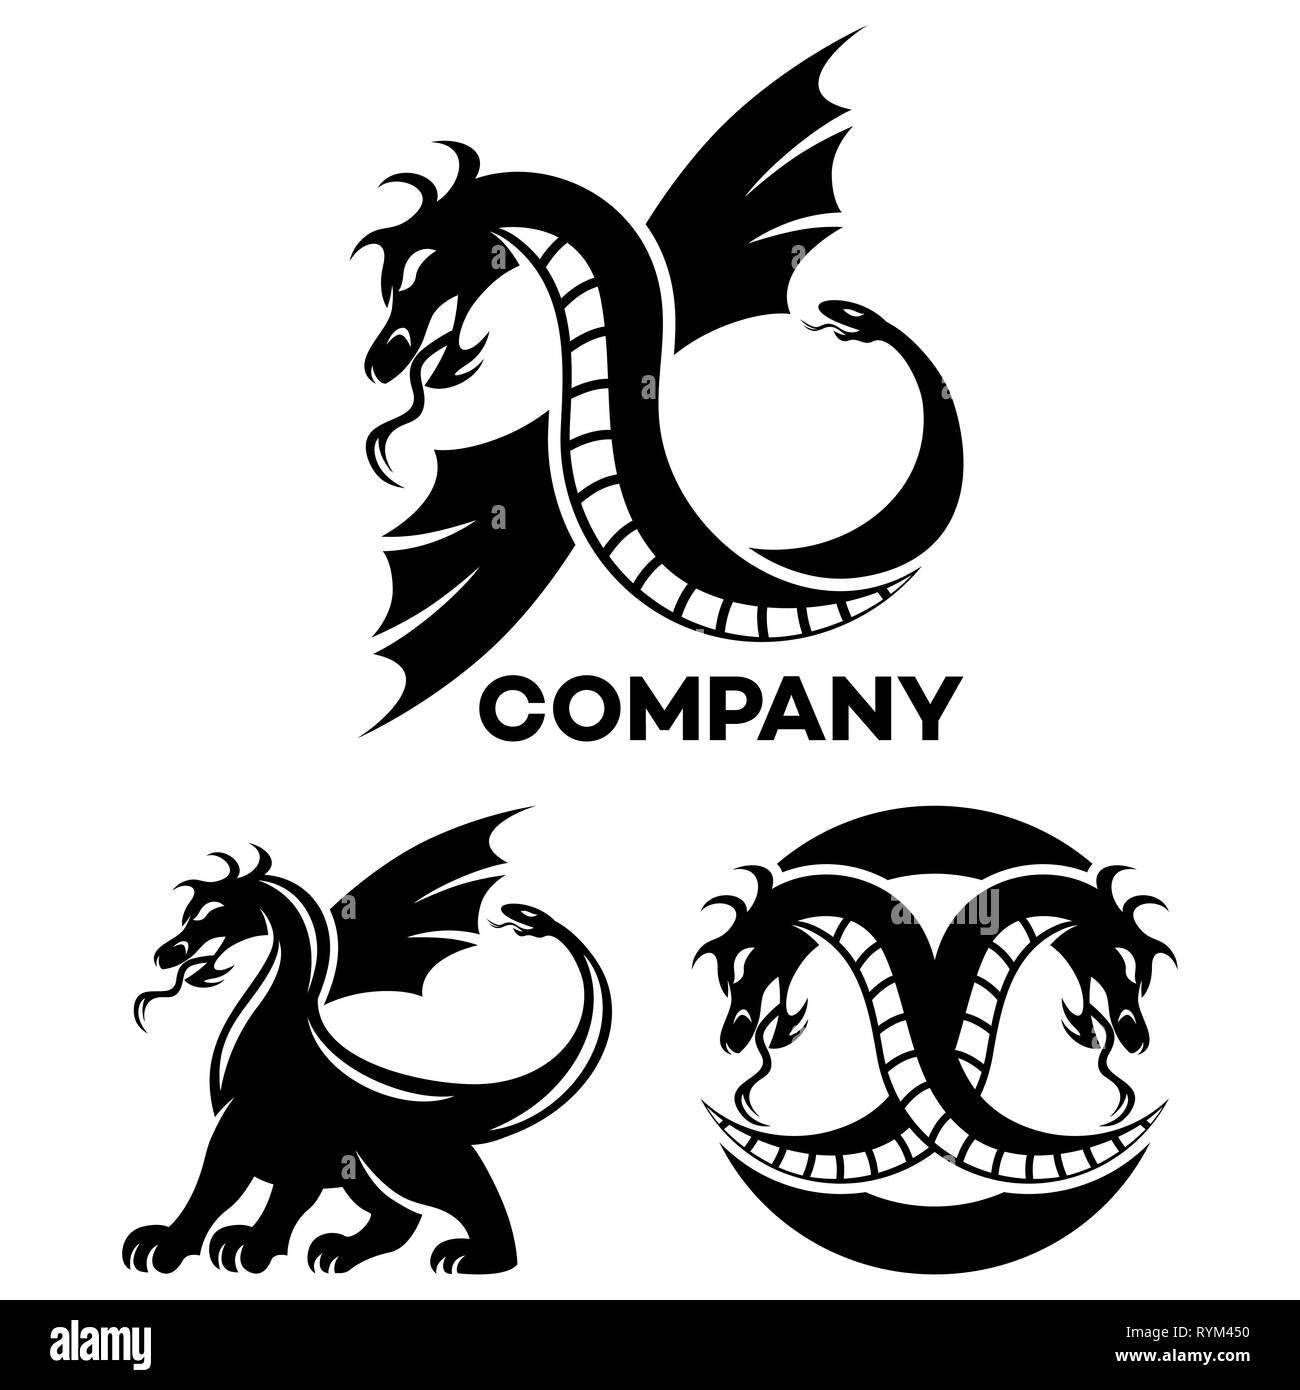 Modern Dragon logo Stock Photo